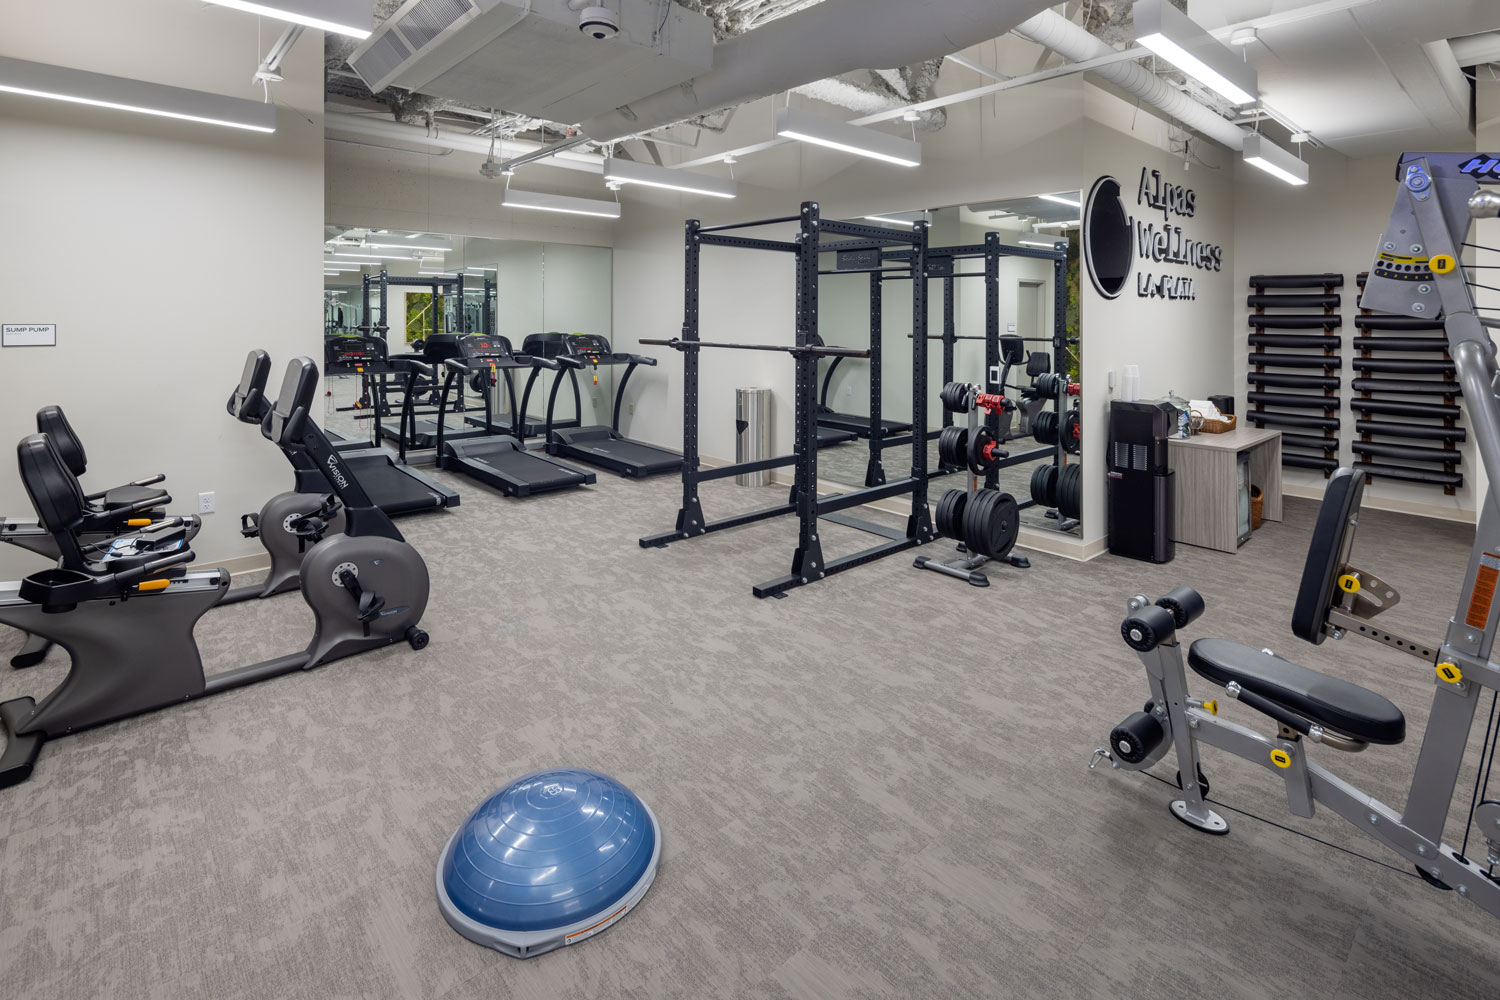 Alpas Wellness Maryland Gym: treadmills, weight machines and exercise bikes